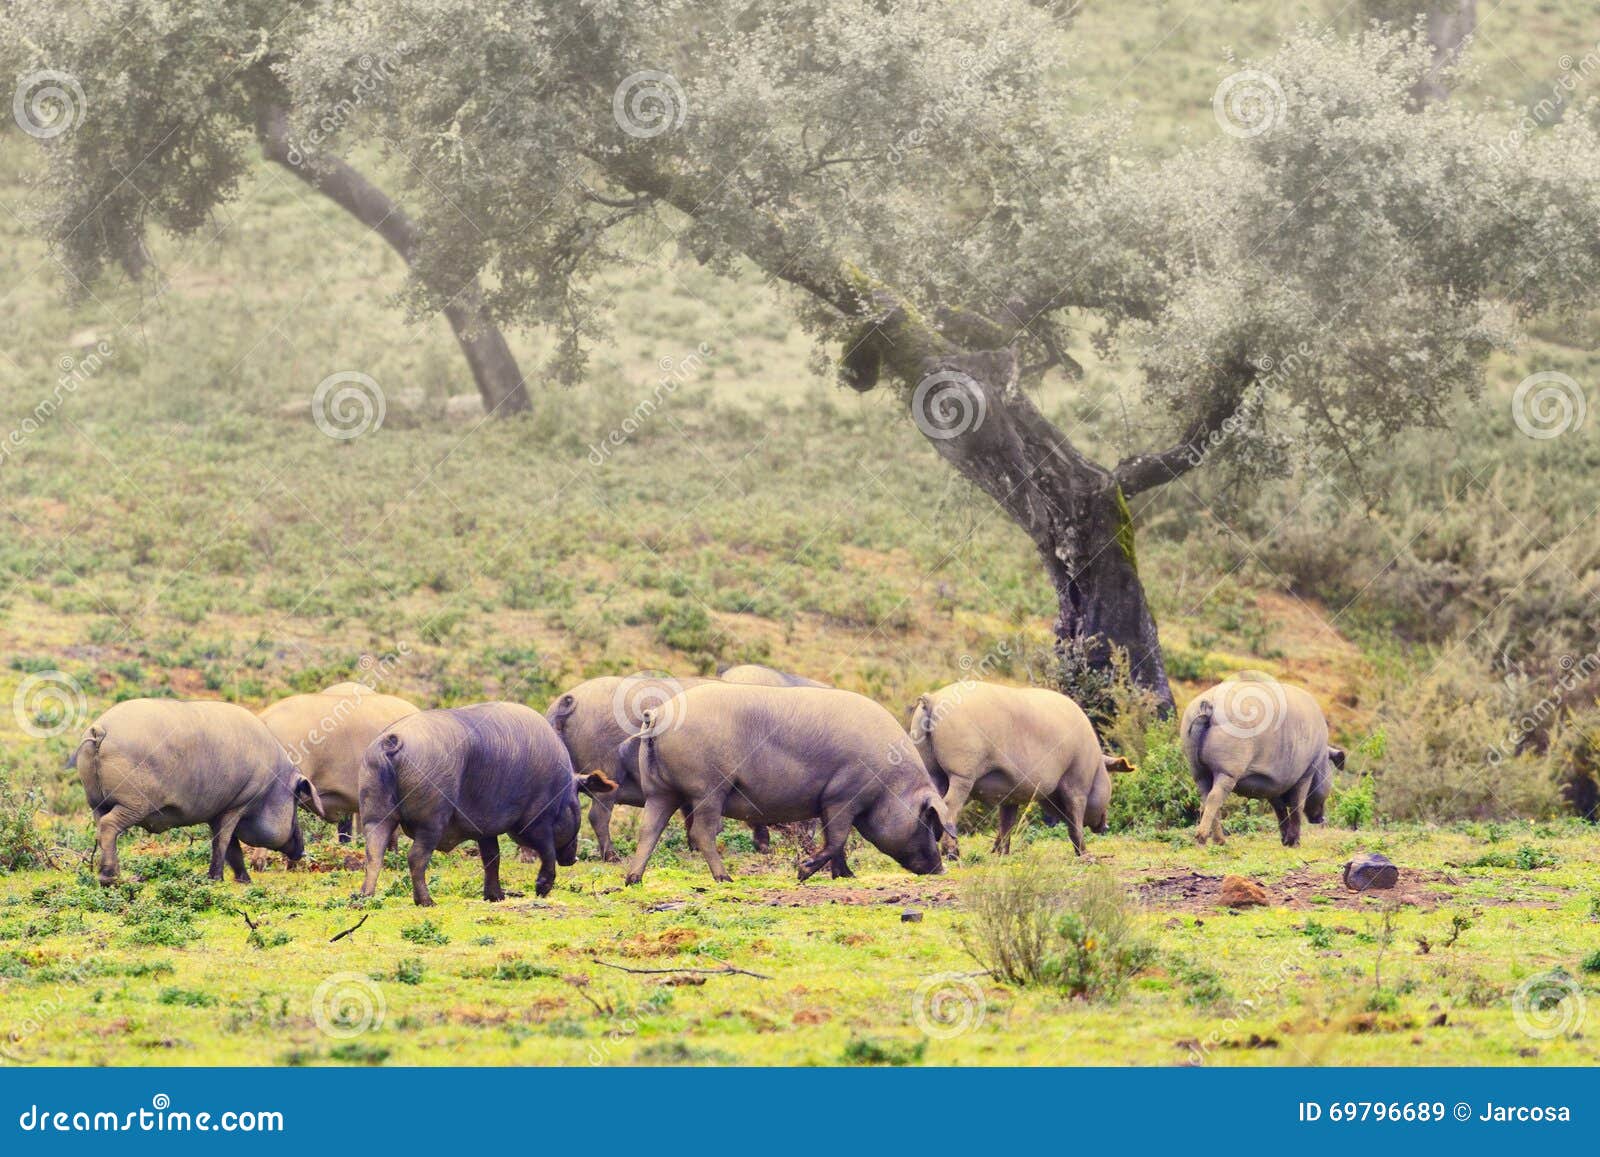 group of iberian pig in the meadow, spain